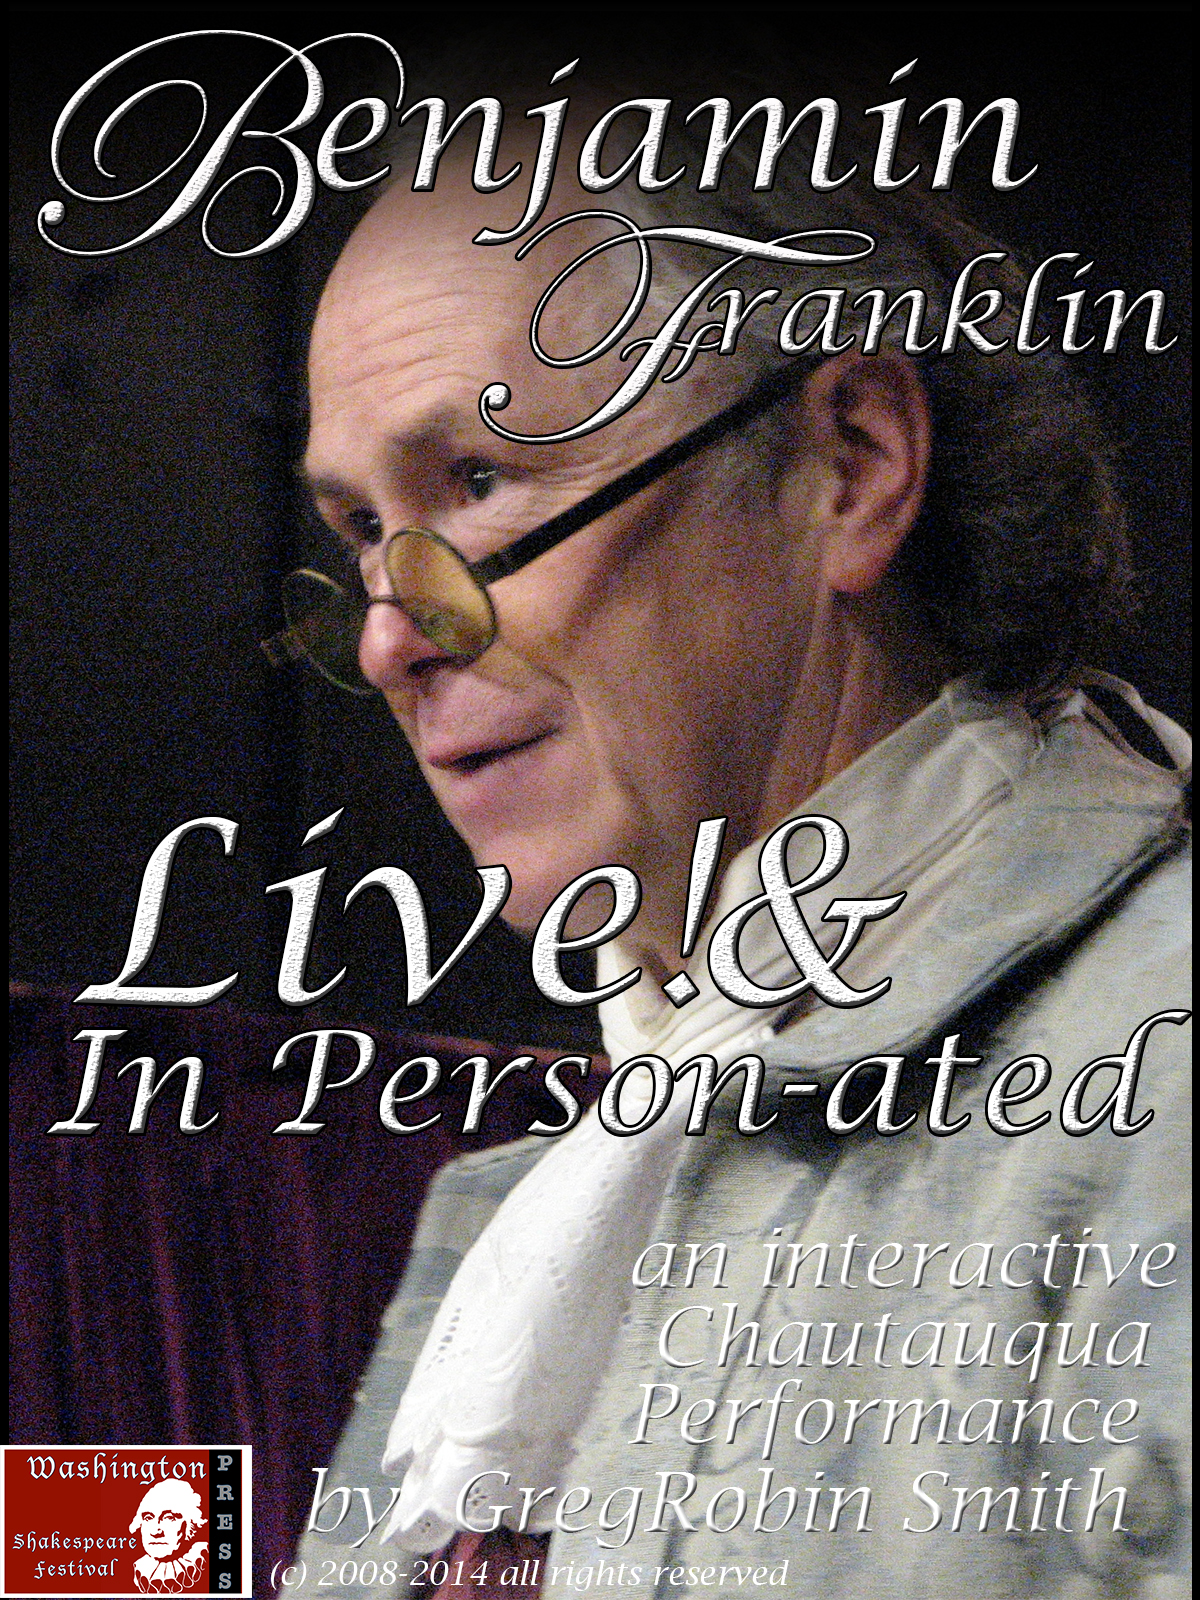 iCon for my Benjamin Franklin - Live! & In Person-ated Video (Amazon.com DVD http://www.amazon.com/Benjamin-Franklin-Dakota-Performance-Interviews/dp/B00BFIFIJO/